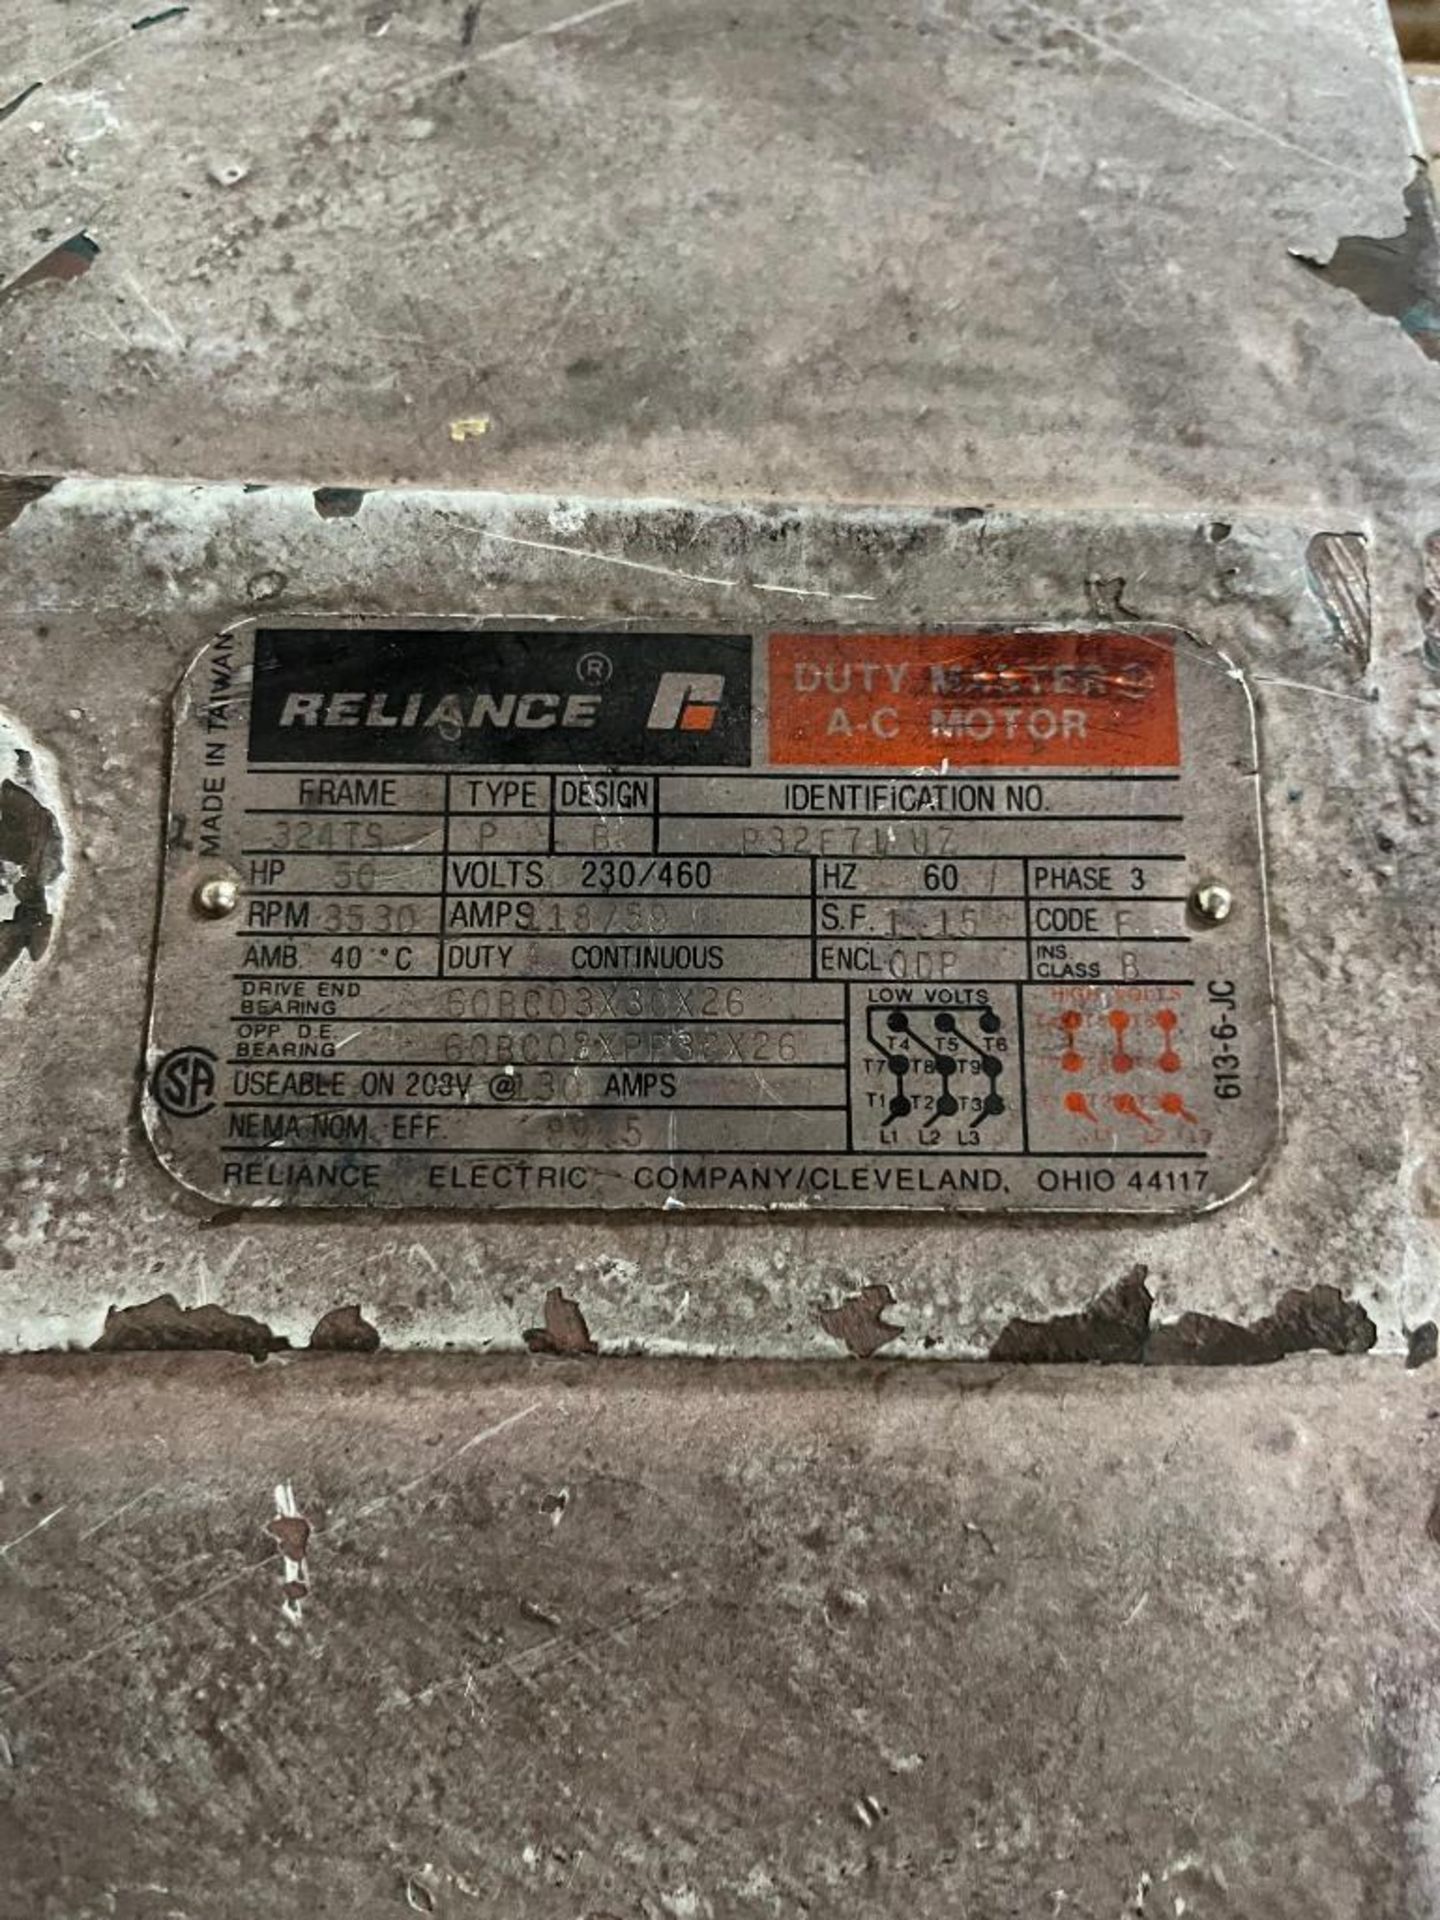 Reliance Duty Master AC Motor, Identification No. P32F71 UZ, Frame: 324TS, 50 HP, 3530 RPM, 3-Phase, - Image 5 of 6